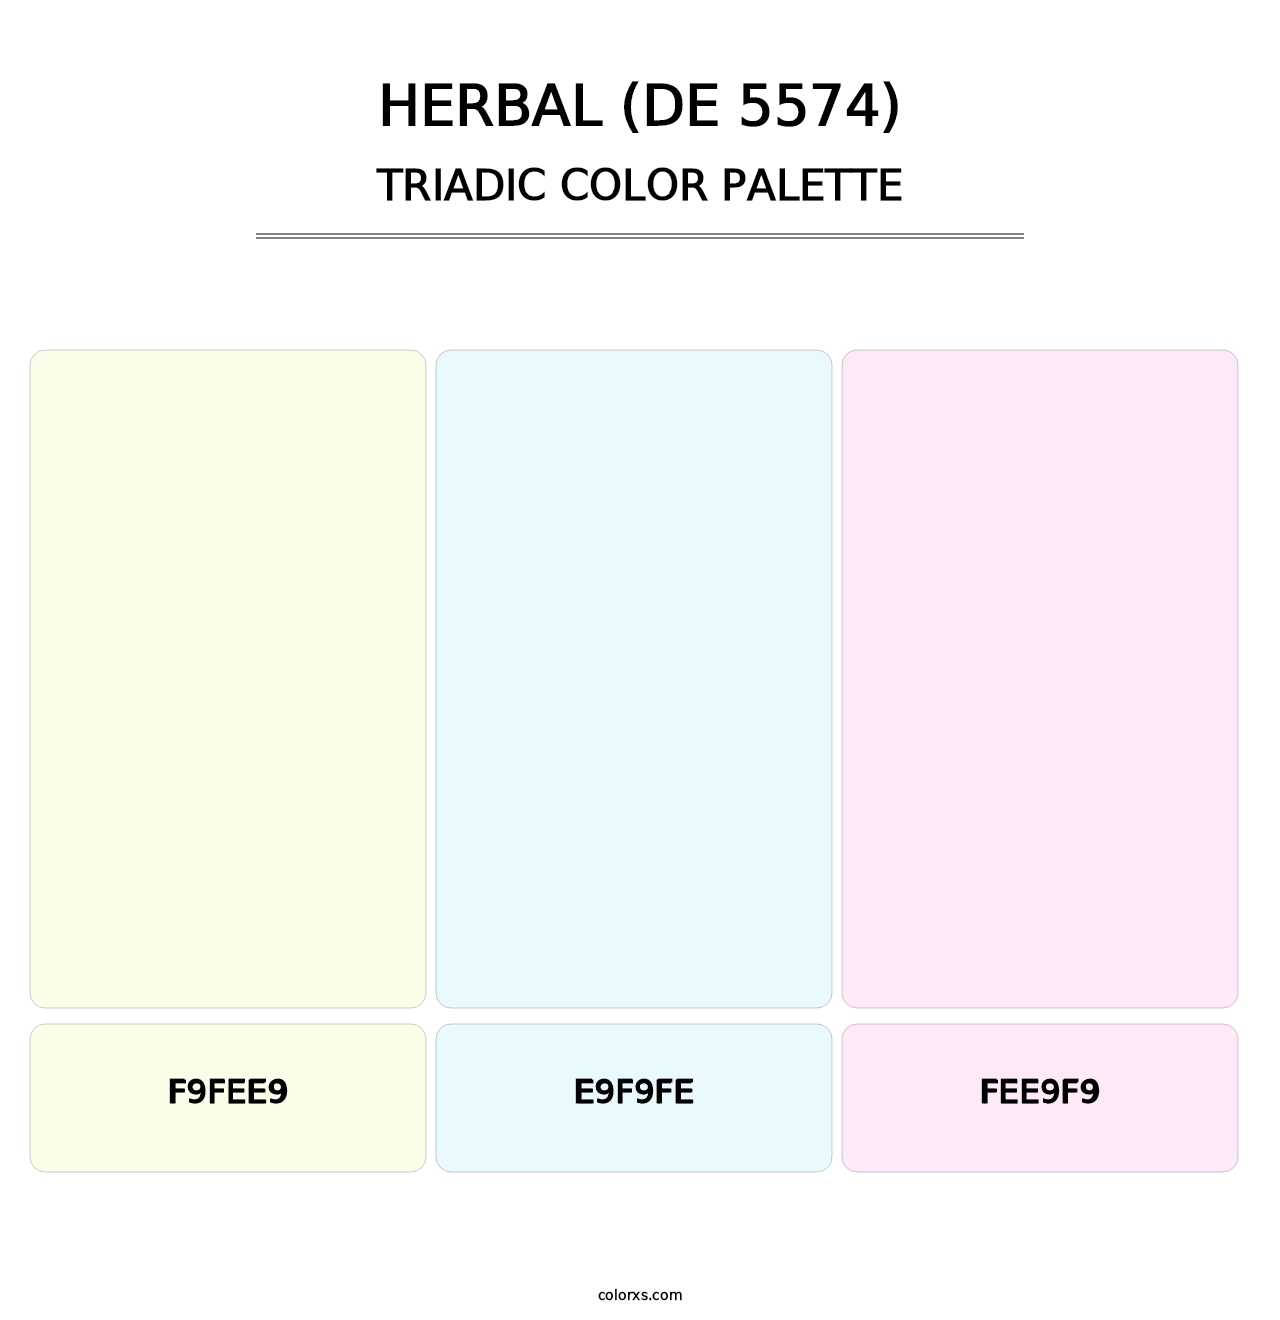 Herbal (DE 5574) - Triadic Color Palette